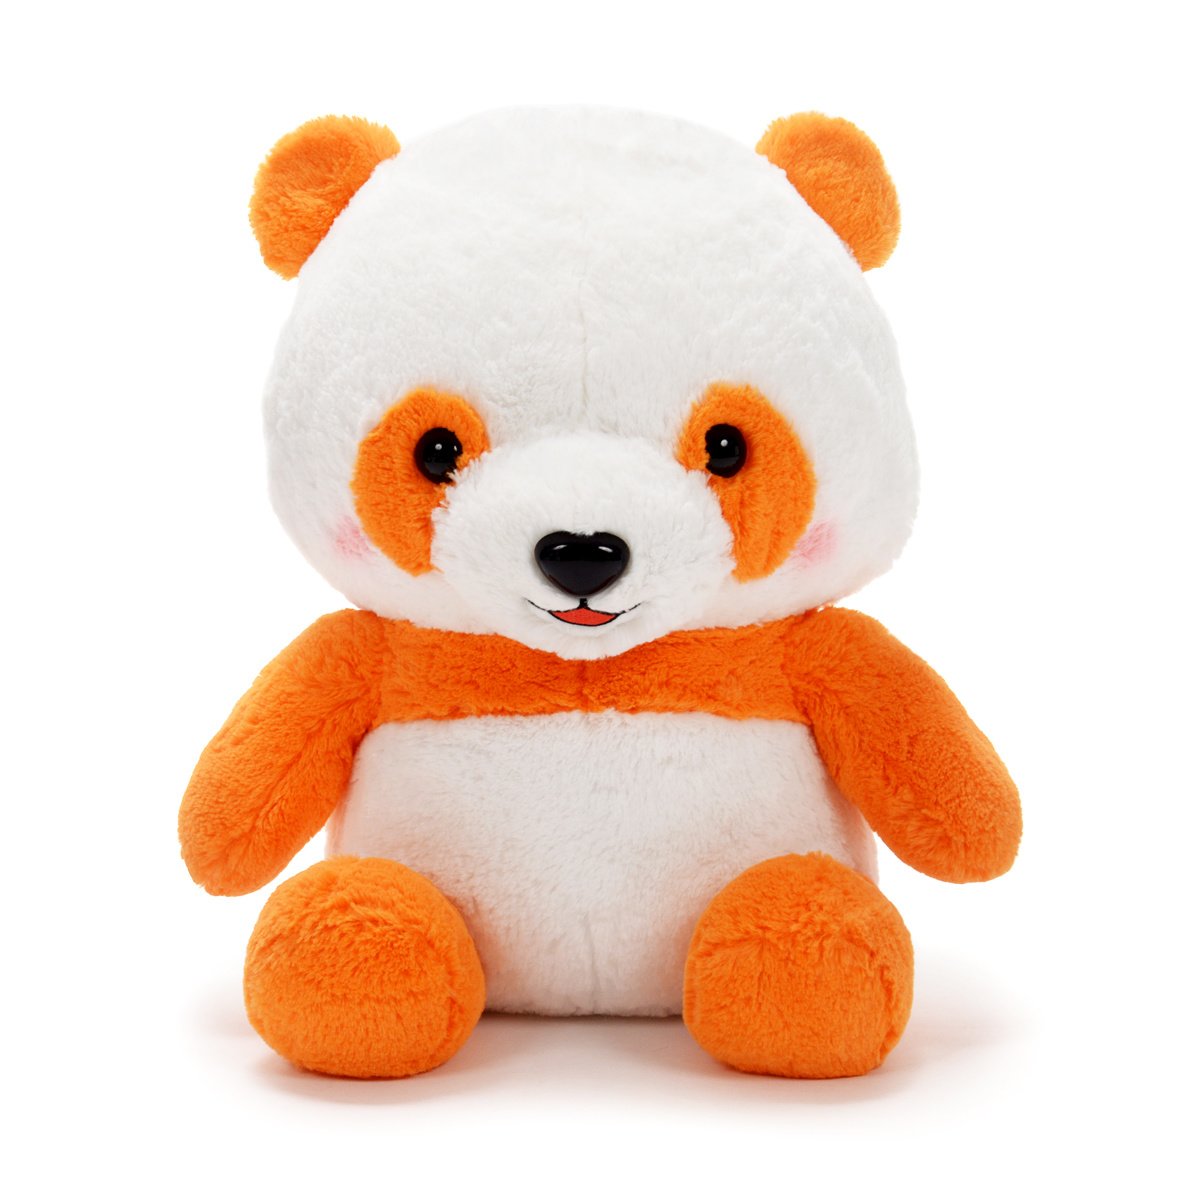 Plush Panda, Amuse, Honwaka Panda Baby, Orange, Orange / White, 16 Inches